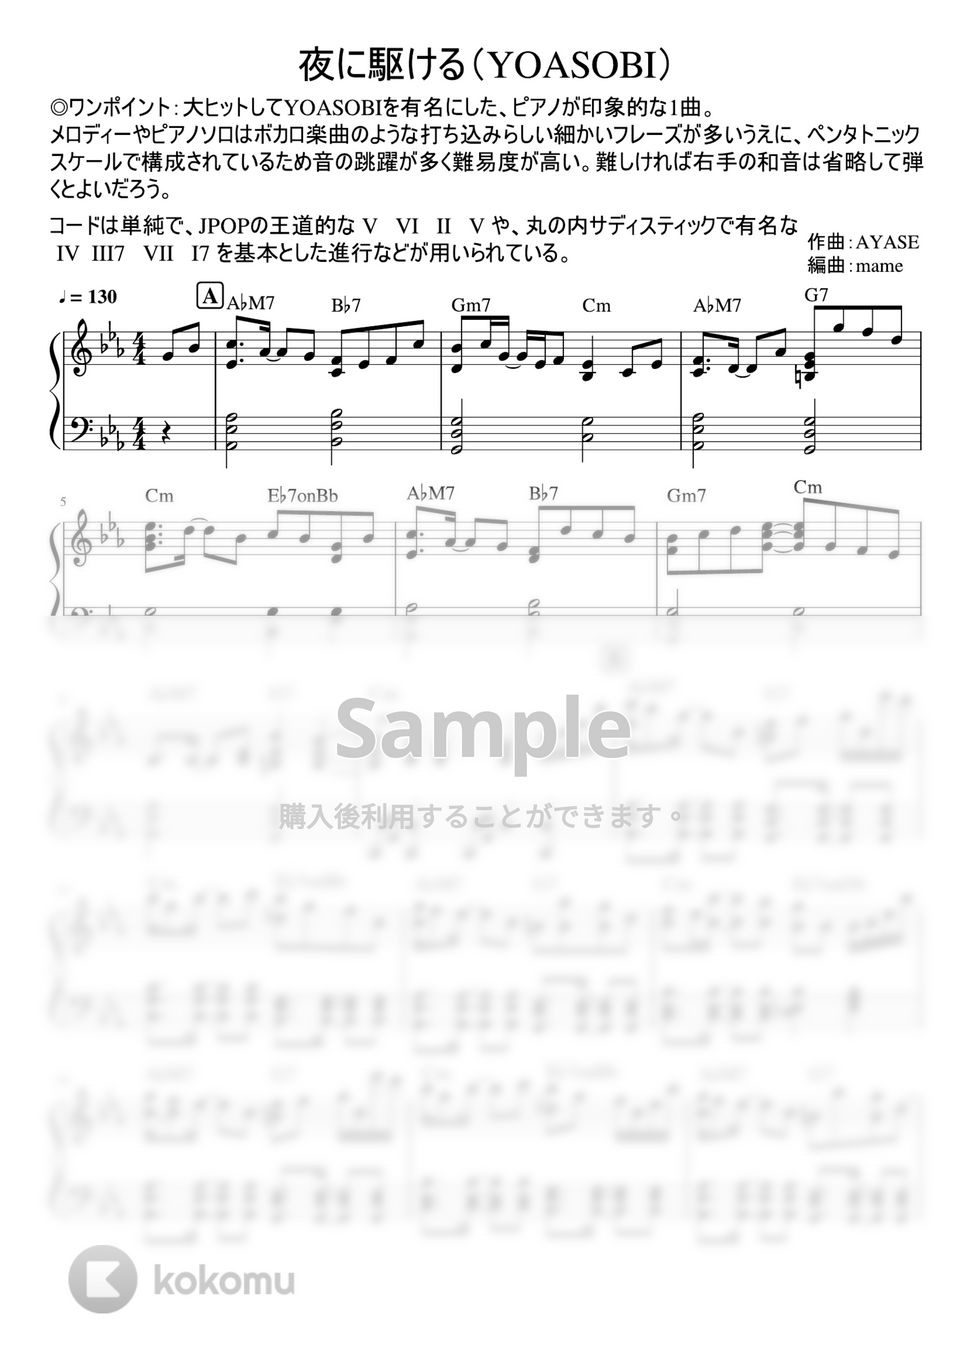 YOASOBI - 夜に駆ける (ソロピアノ) by mame